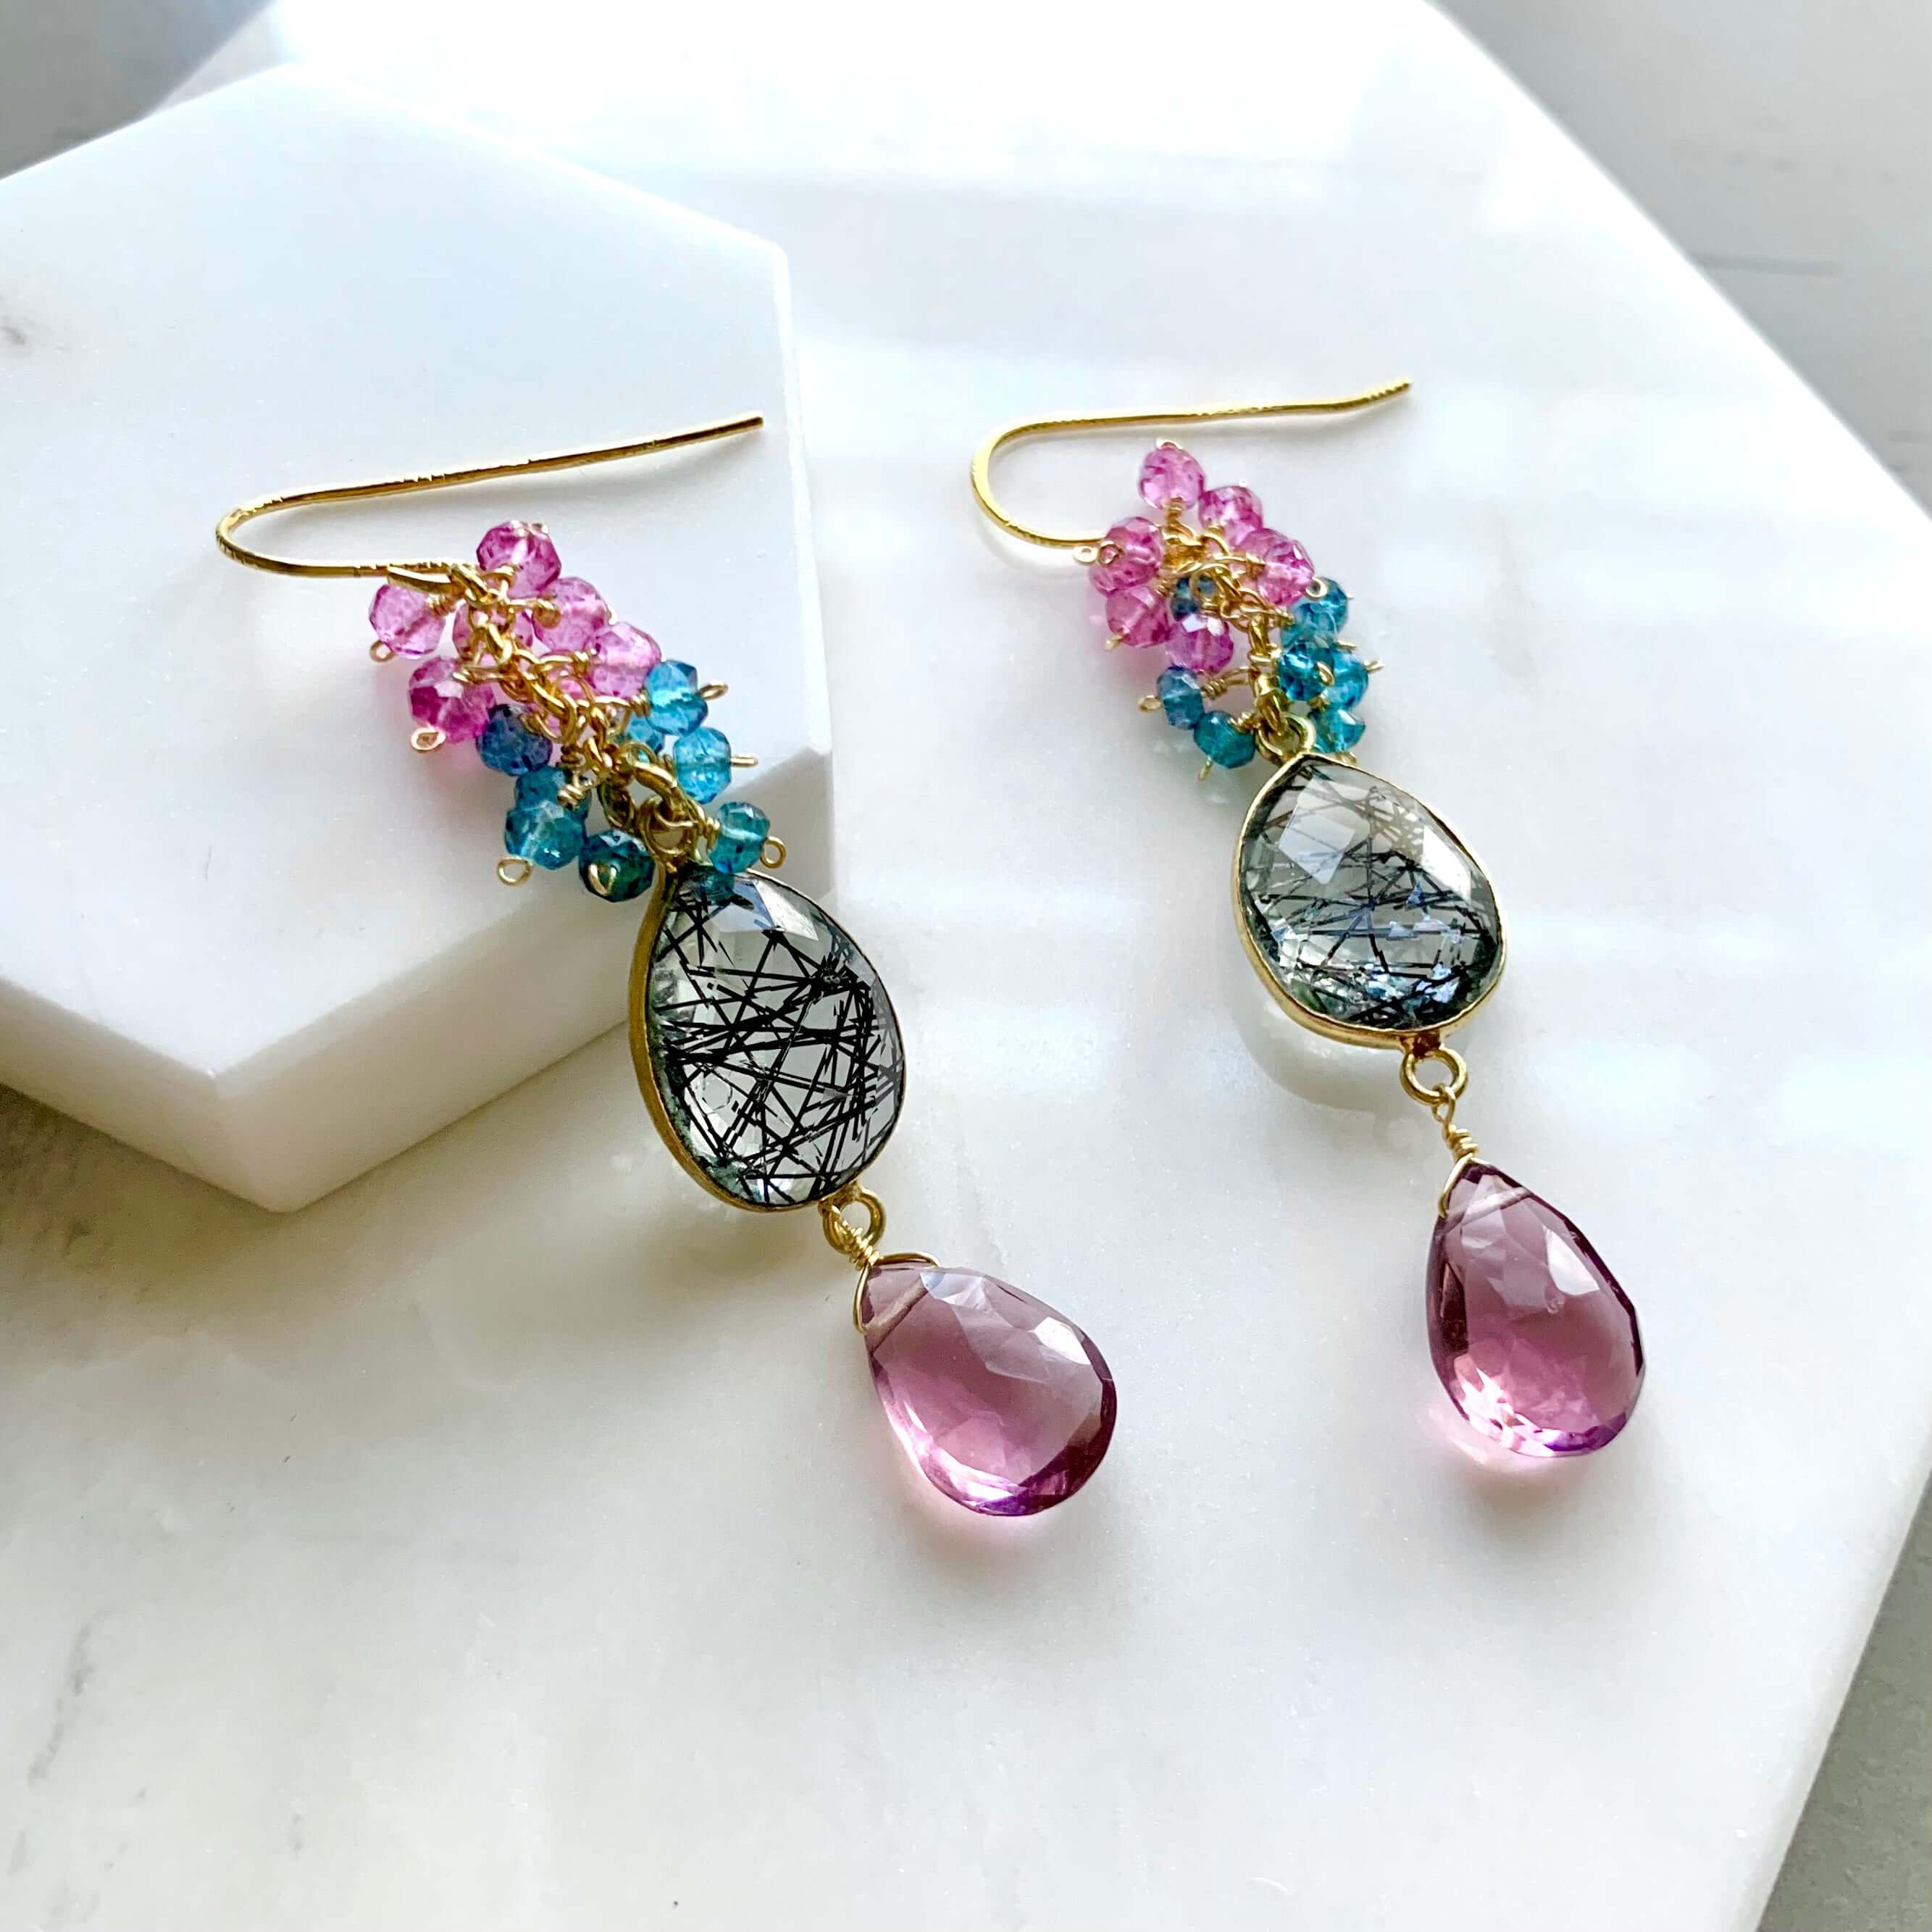 Long gemstone Drop earrings  with dazzling pink rhodolite garnet gems and black rutilated quartz bezel stones